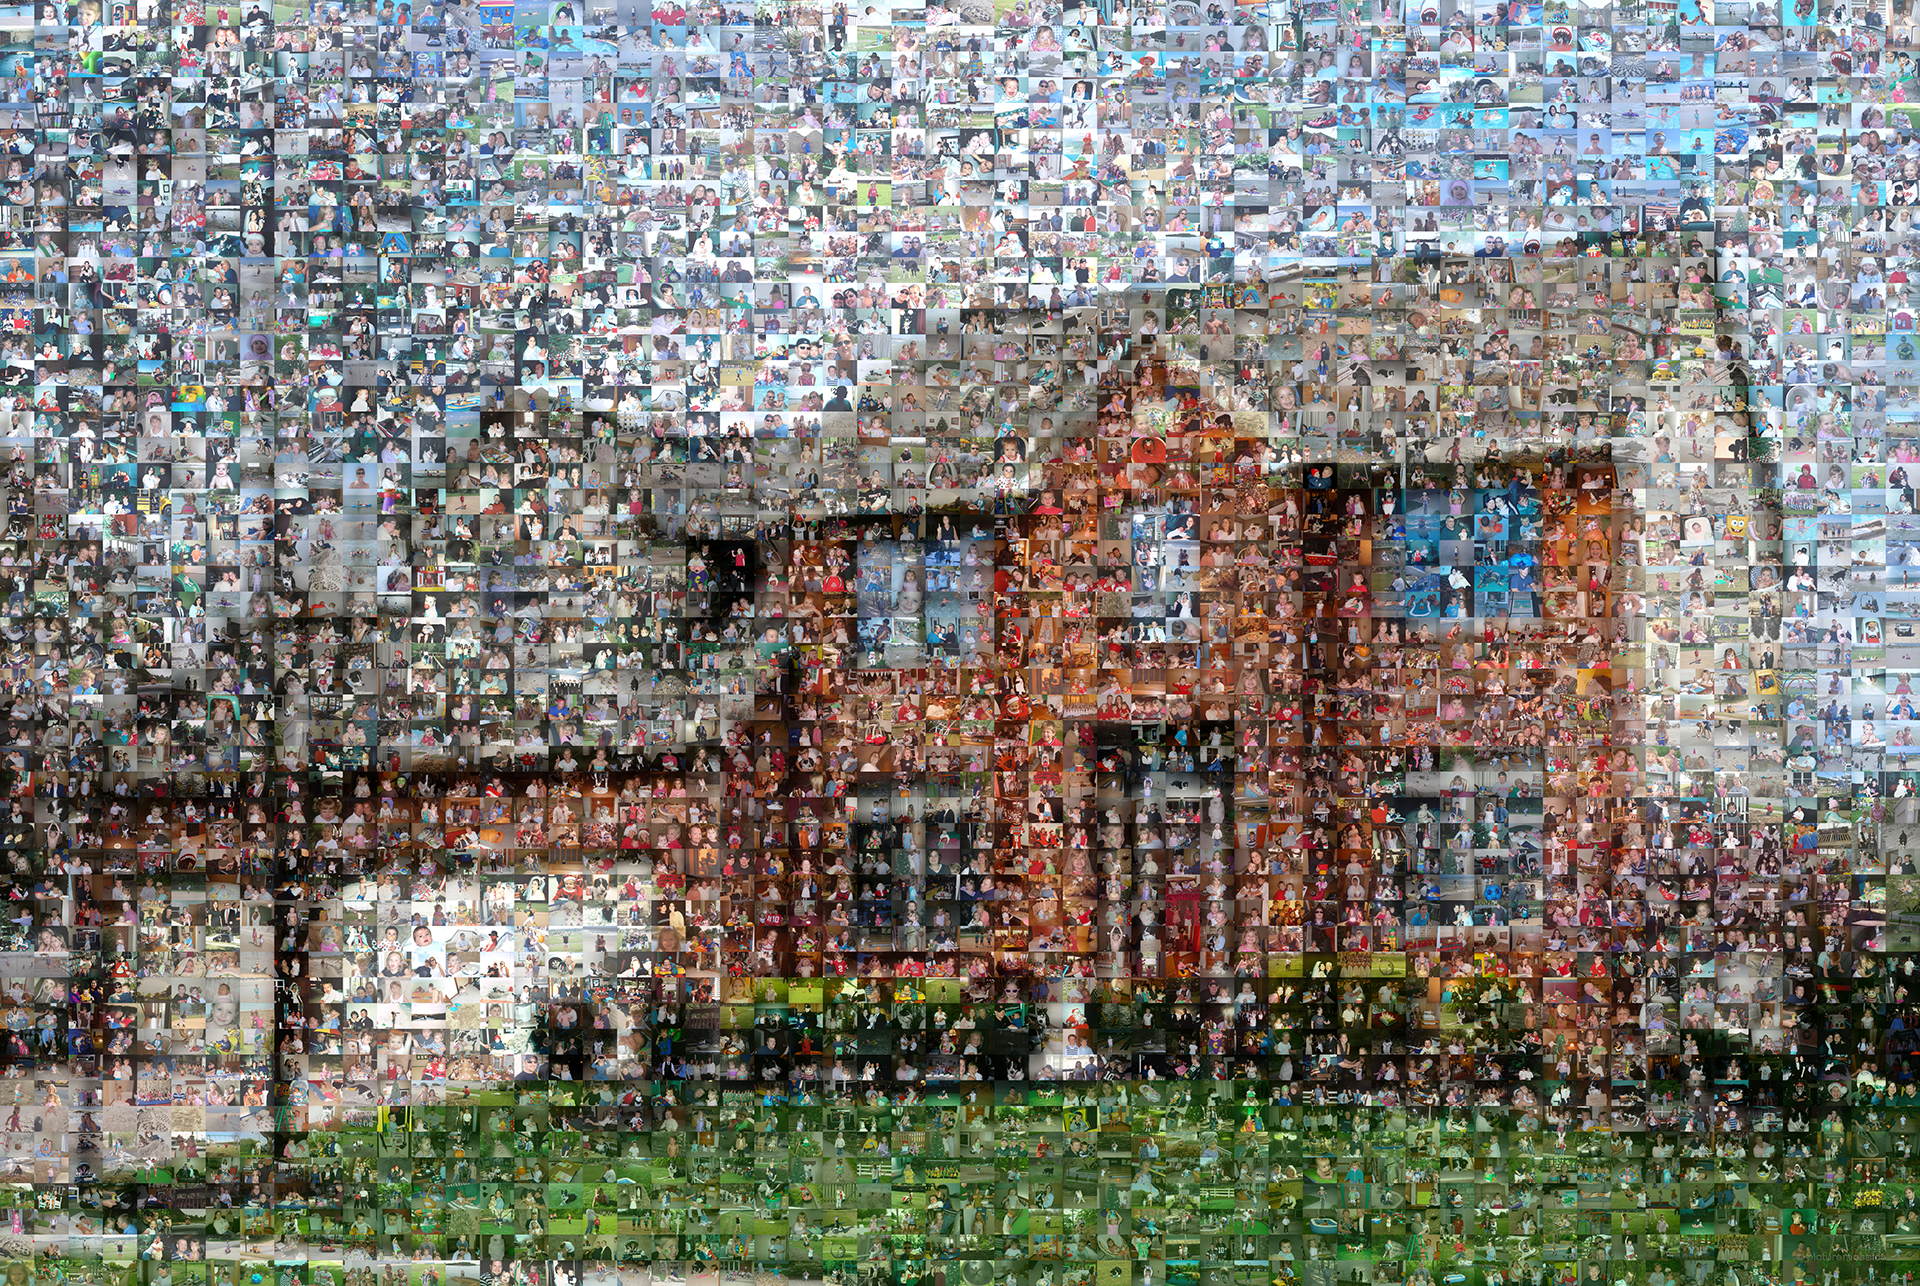 photo mosaic created using over 2300 family photos